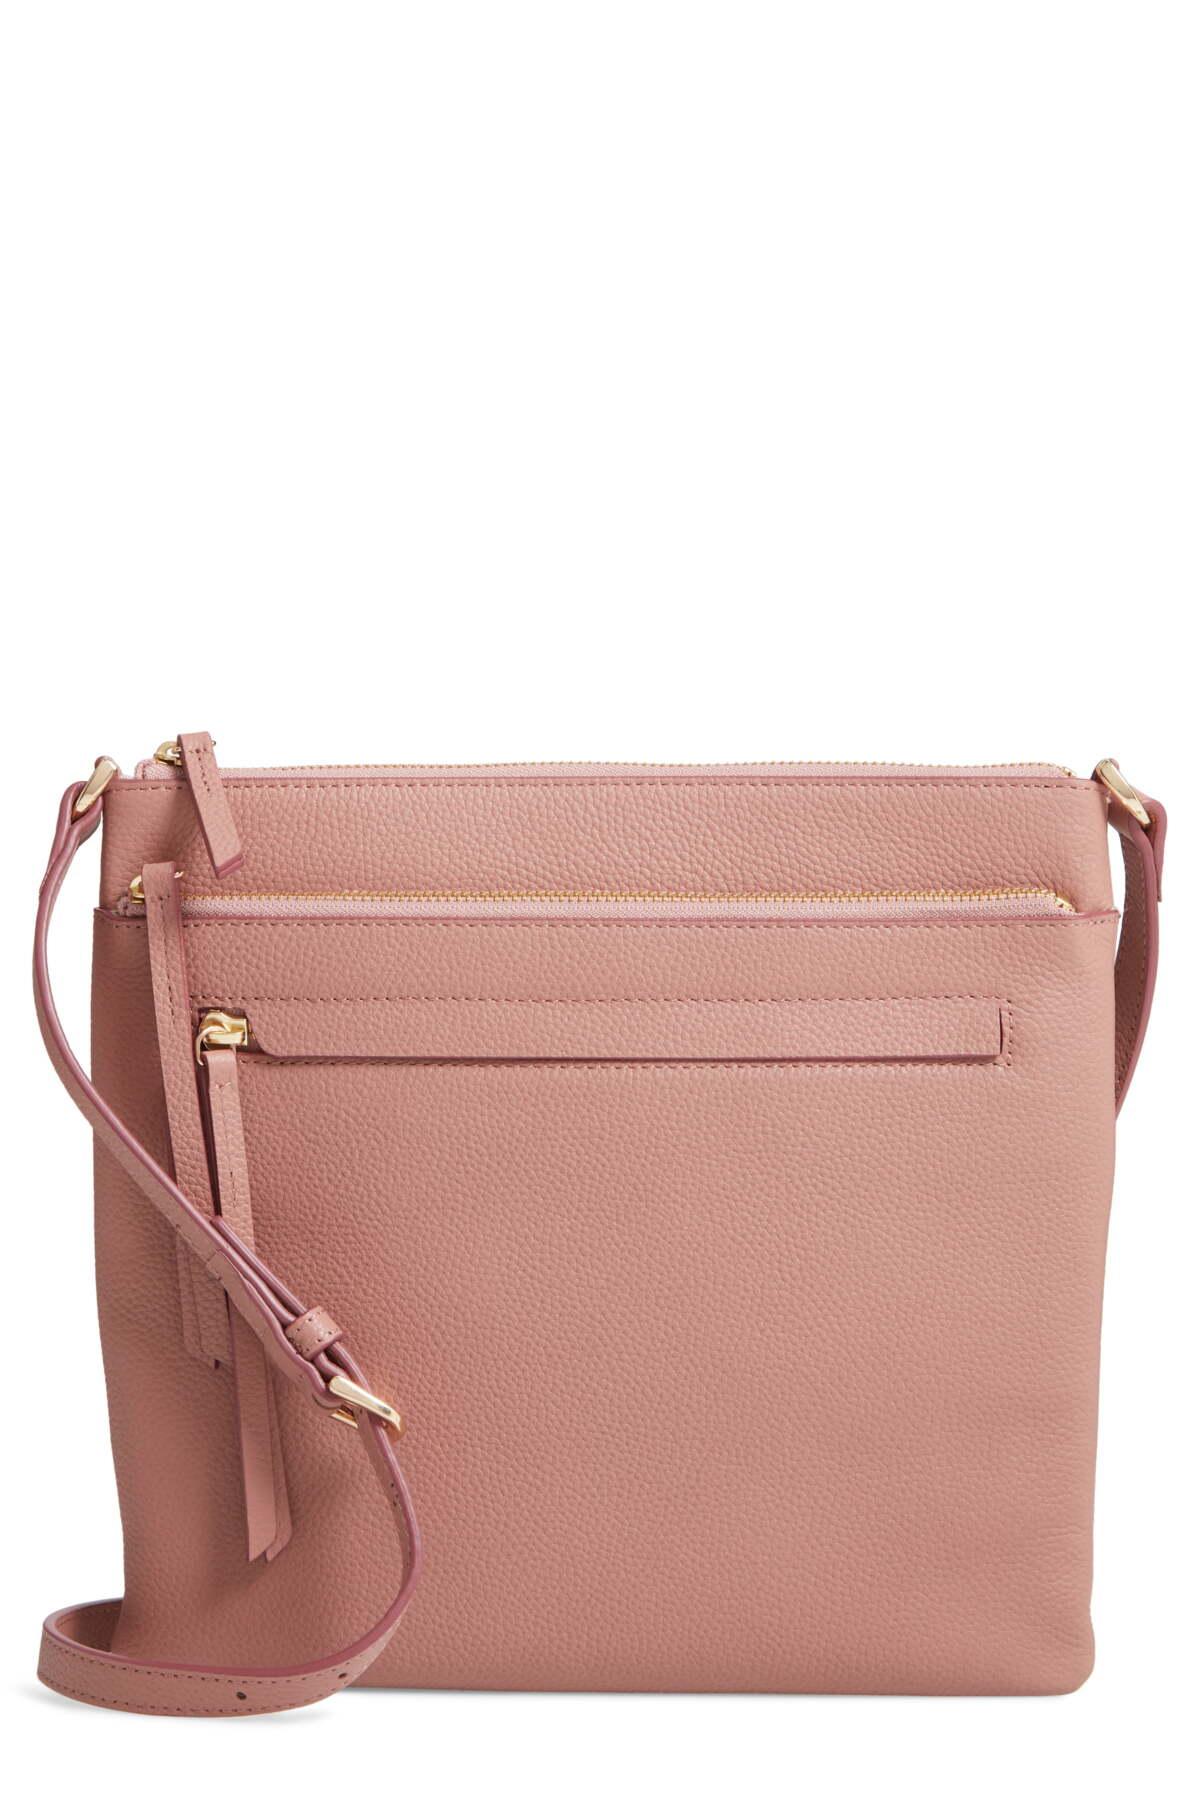 Nordstrom Finn Leather Crossbody Bag in Pink - Lyst